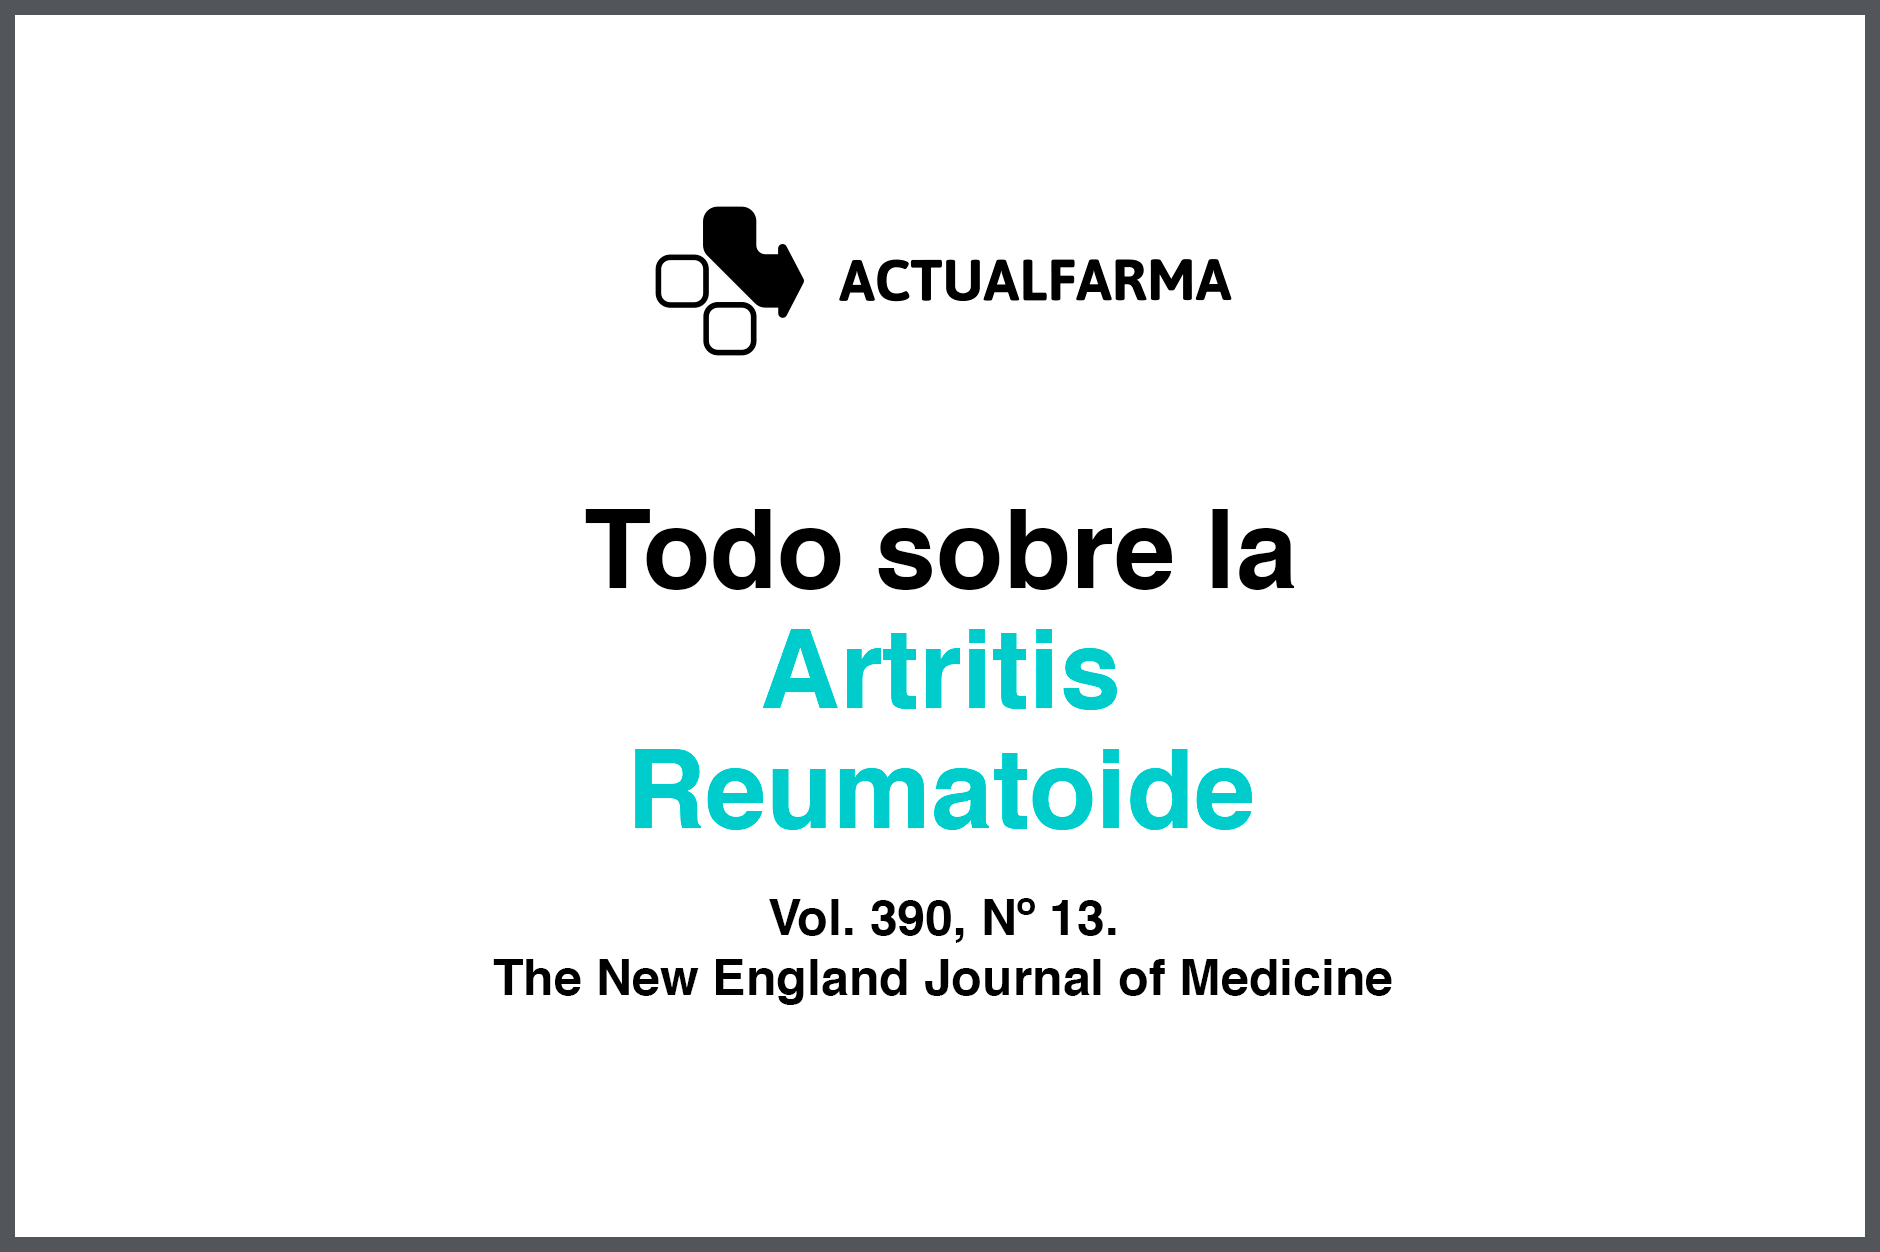 Todo sobre la artritis reumatoide.